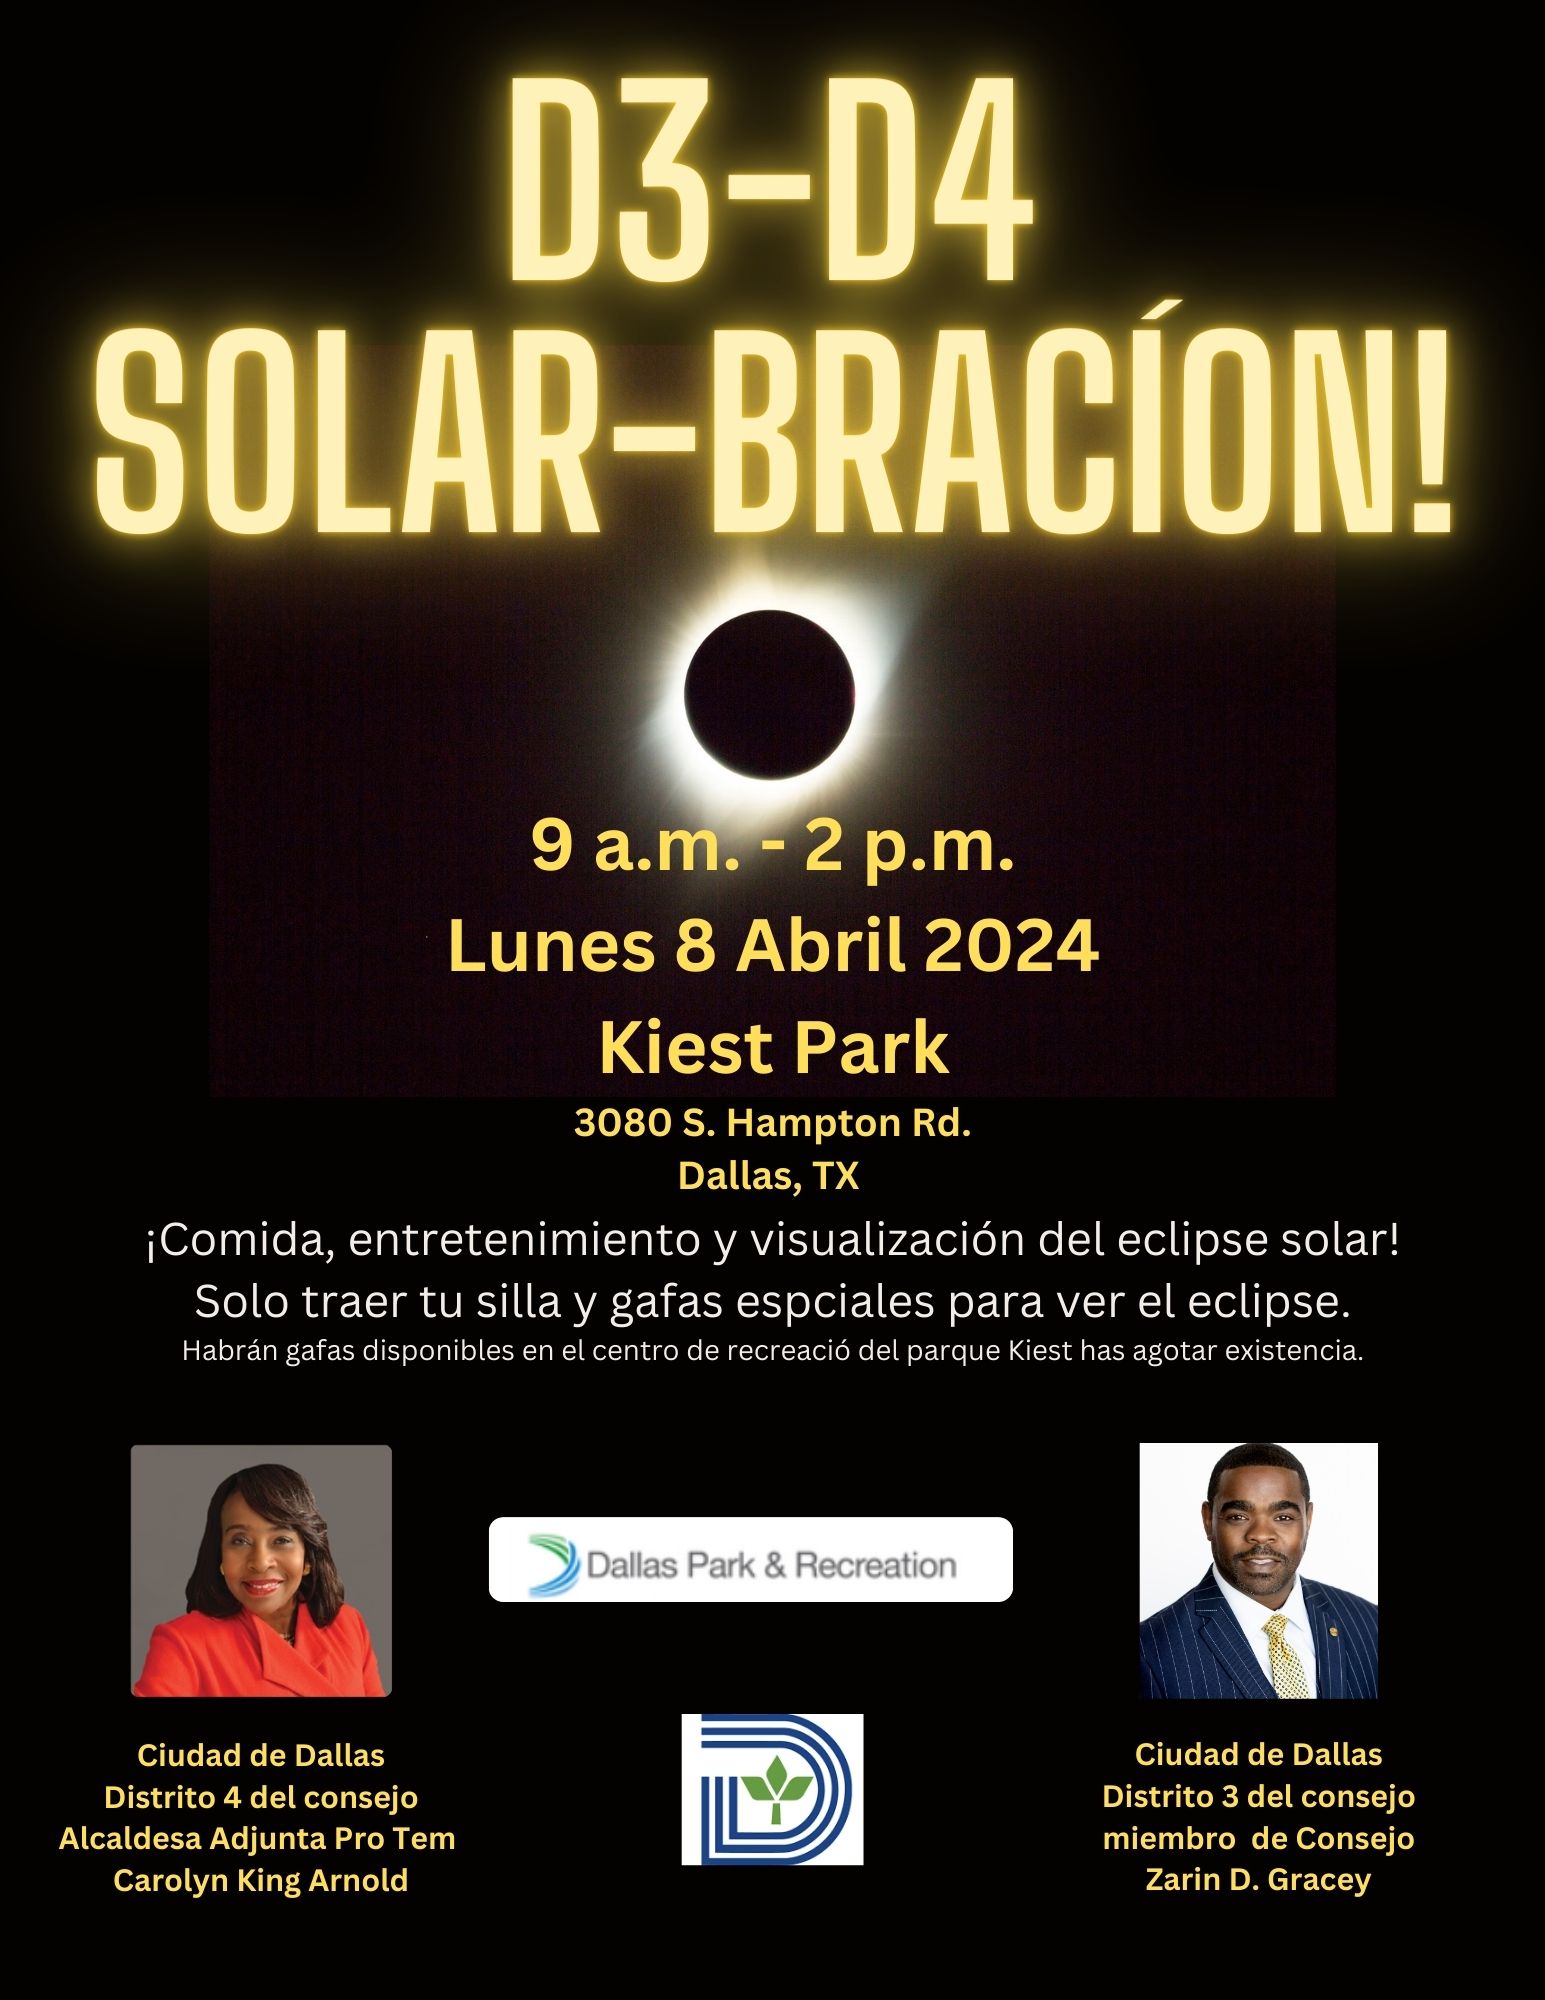 Solar-Bration! April 8 2024 d3-d4 flyer spanish final.jpg